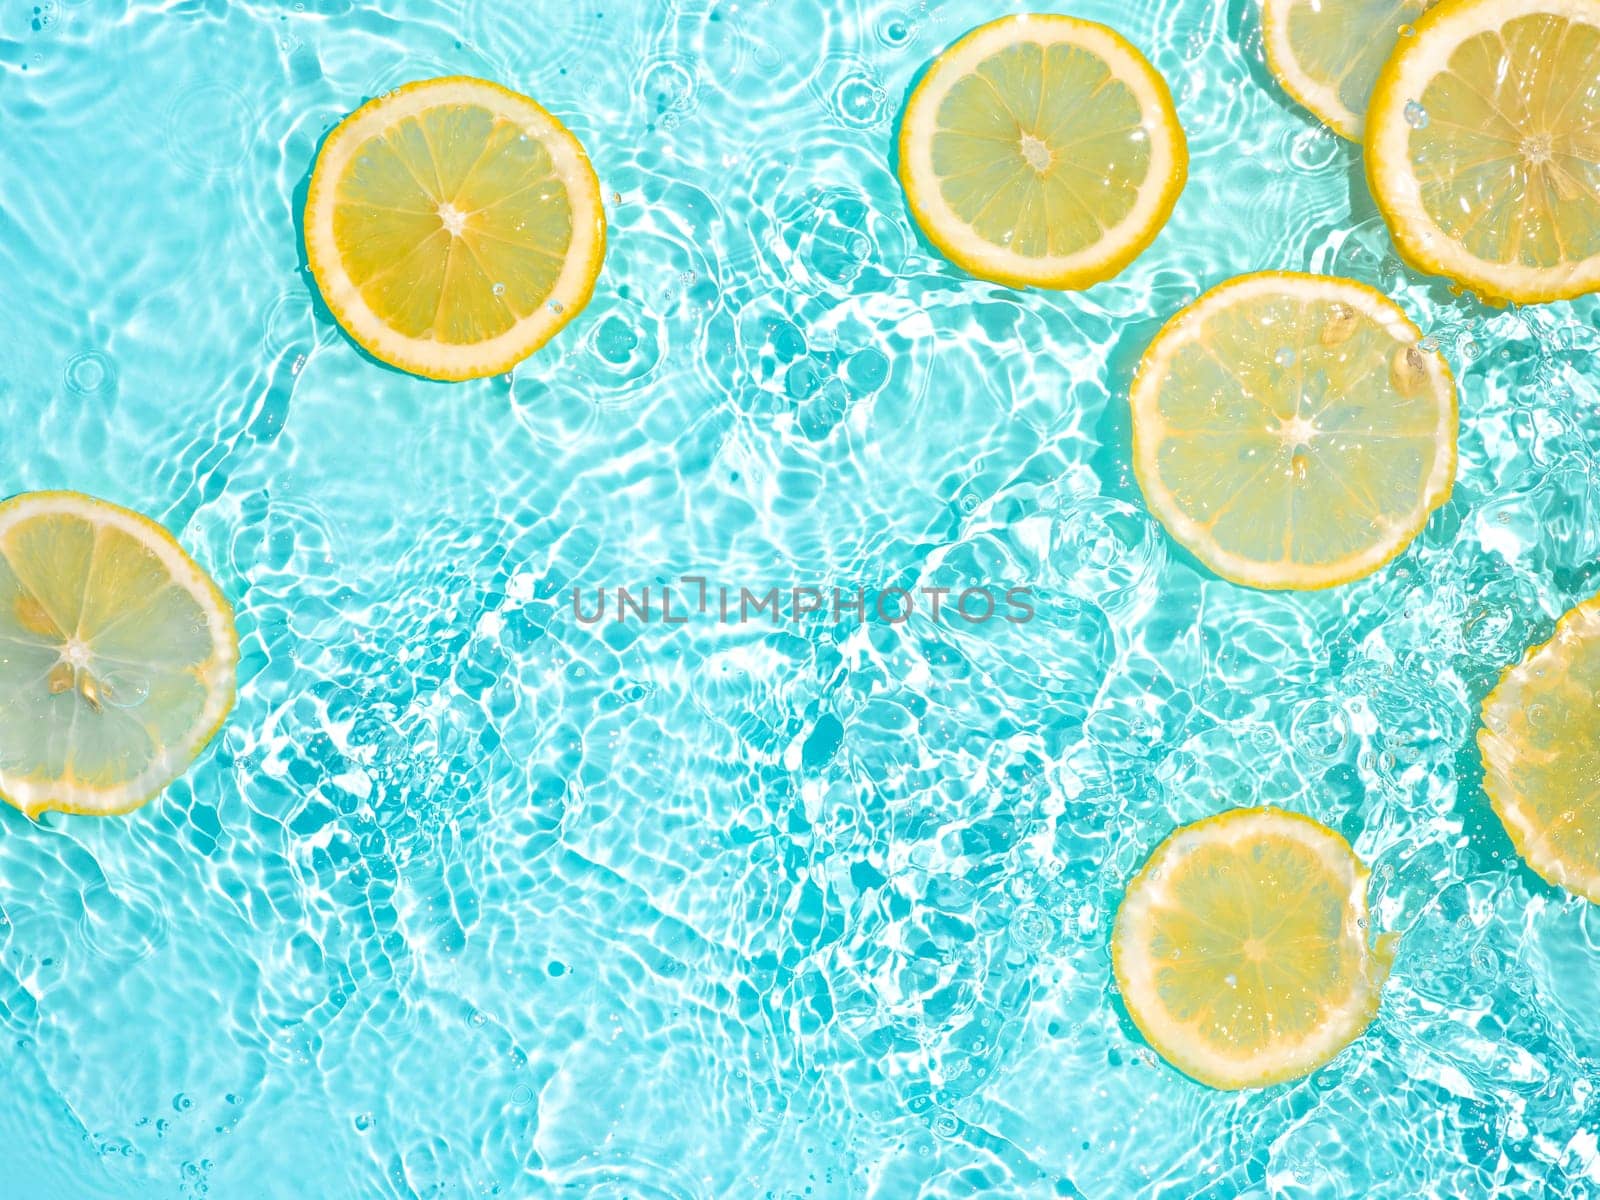 Lemon slices in clean transparent water, blue bg by fascinadora